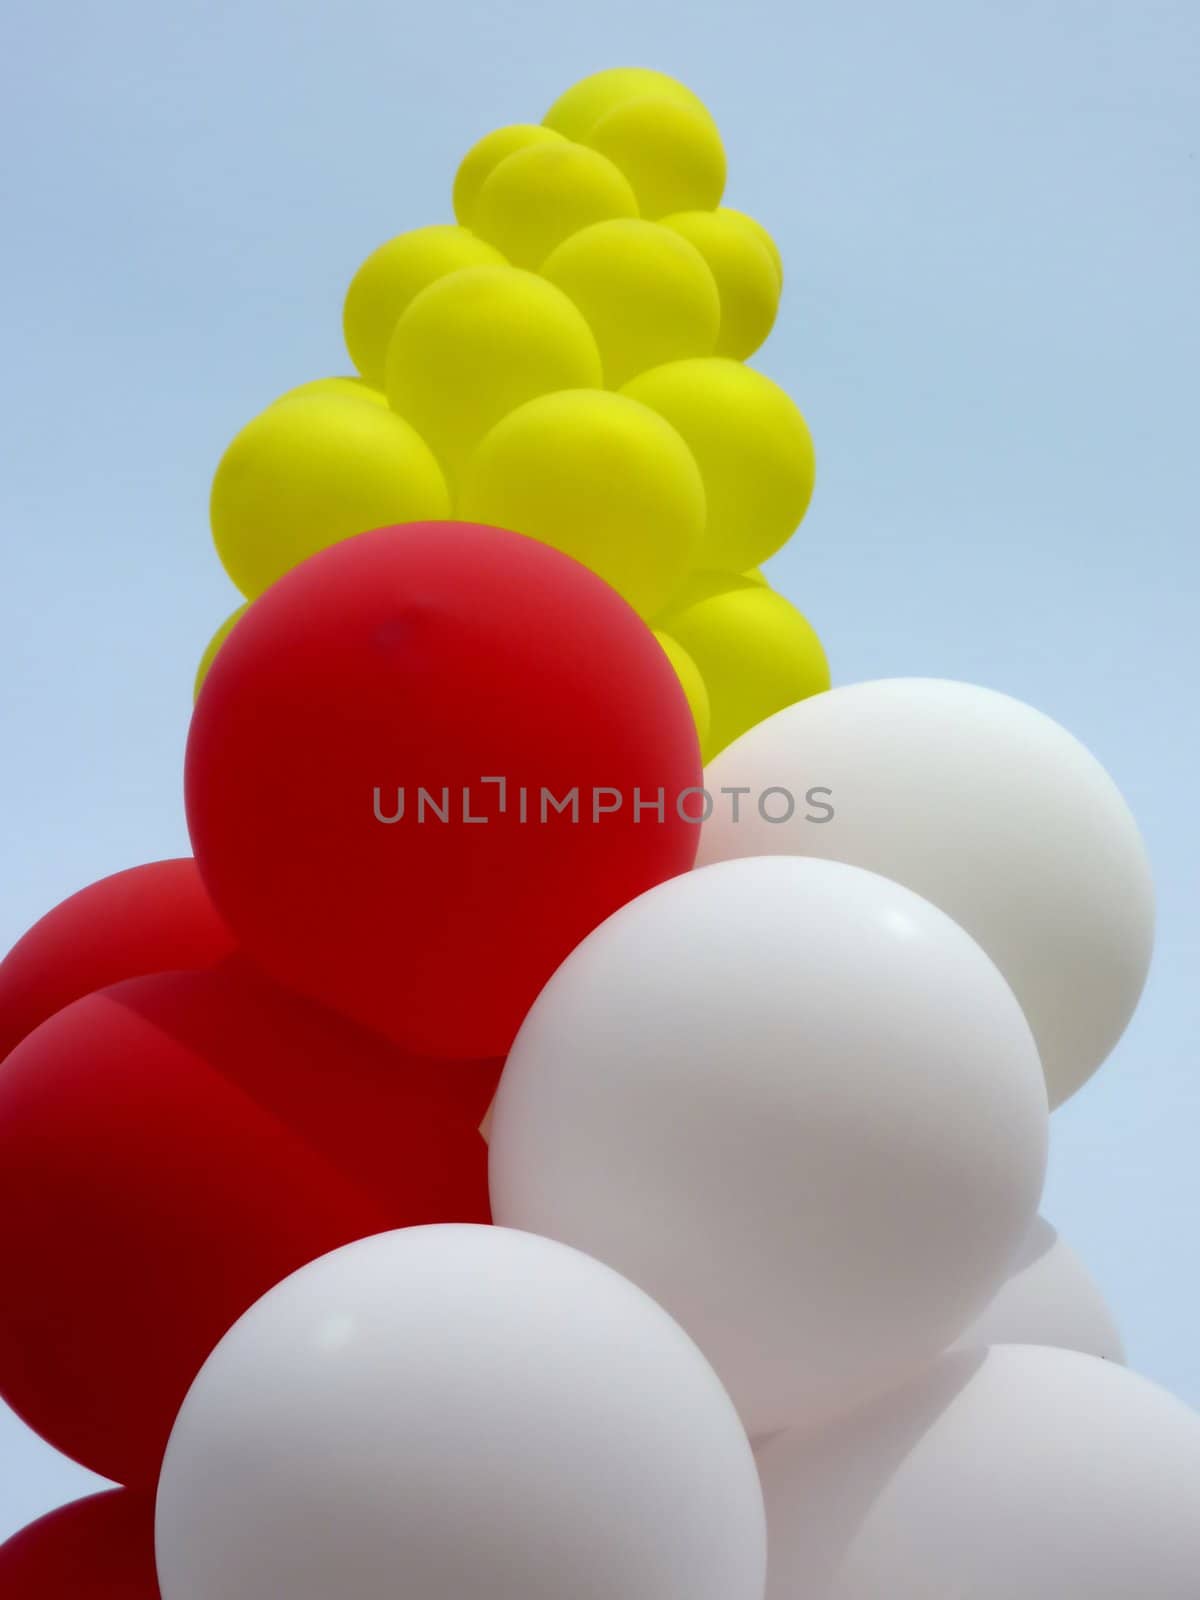 Colored balloons by Elenaphotos21